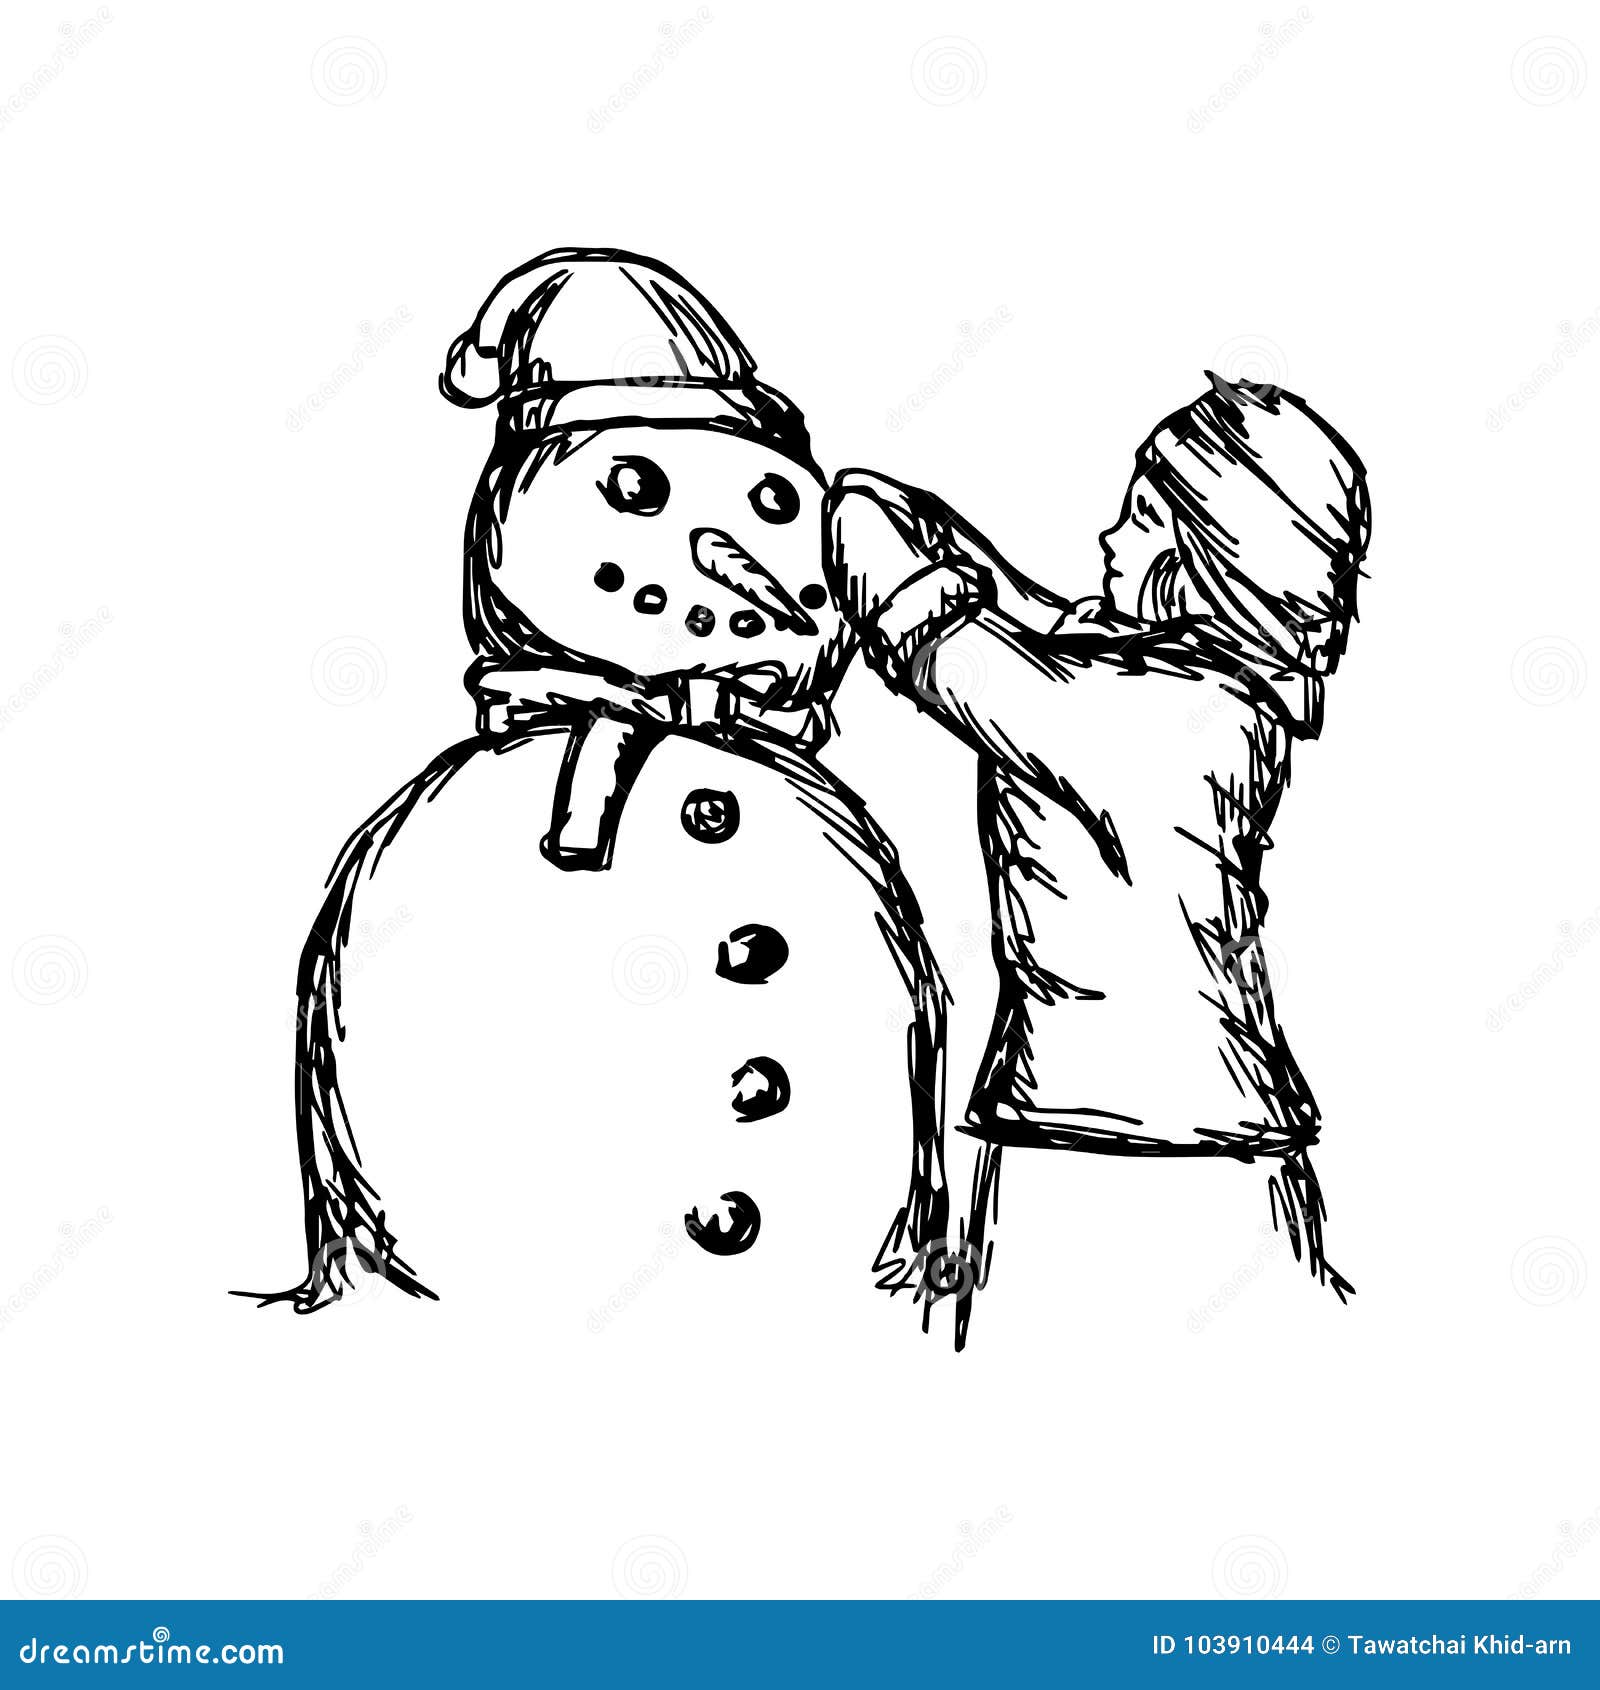 snowman girl drawings